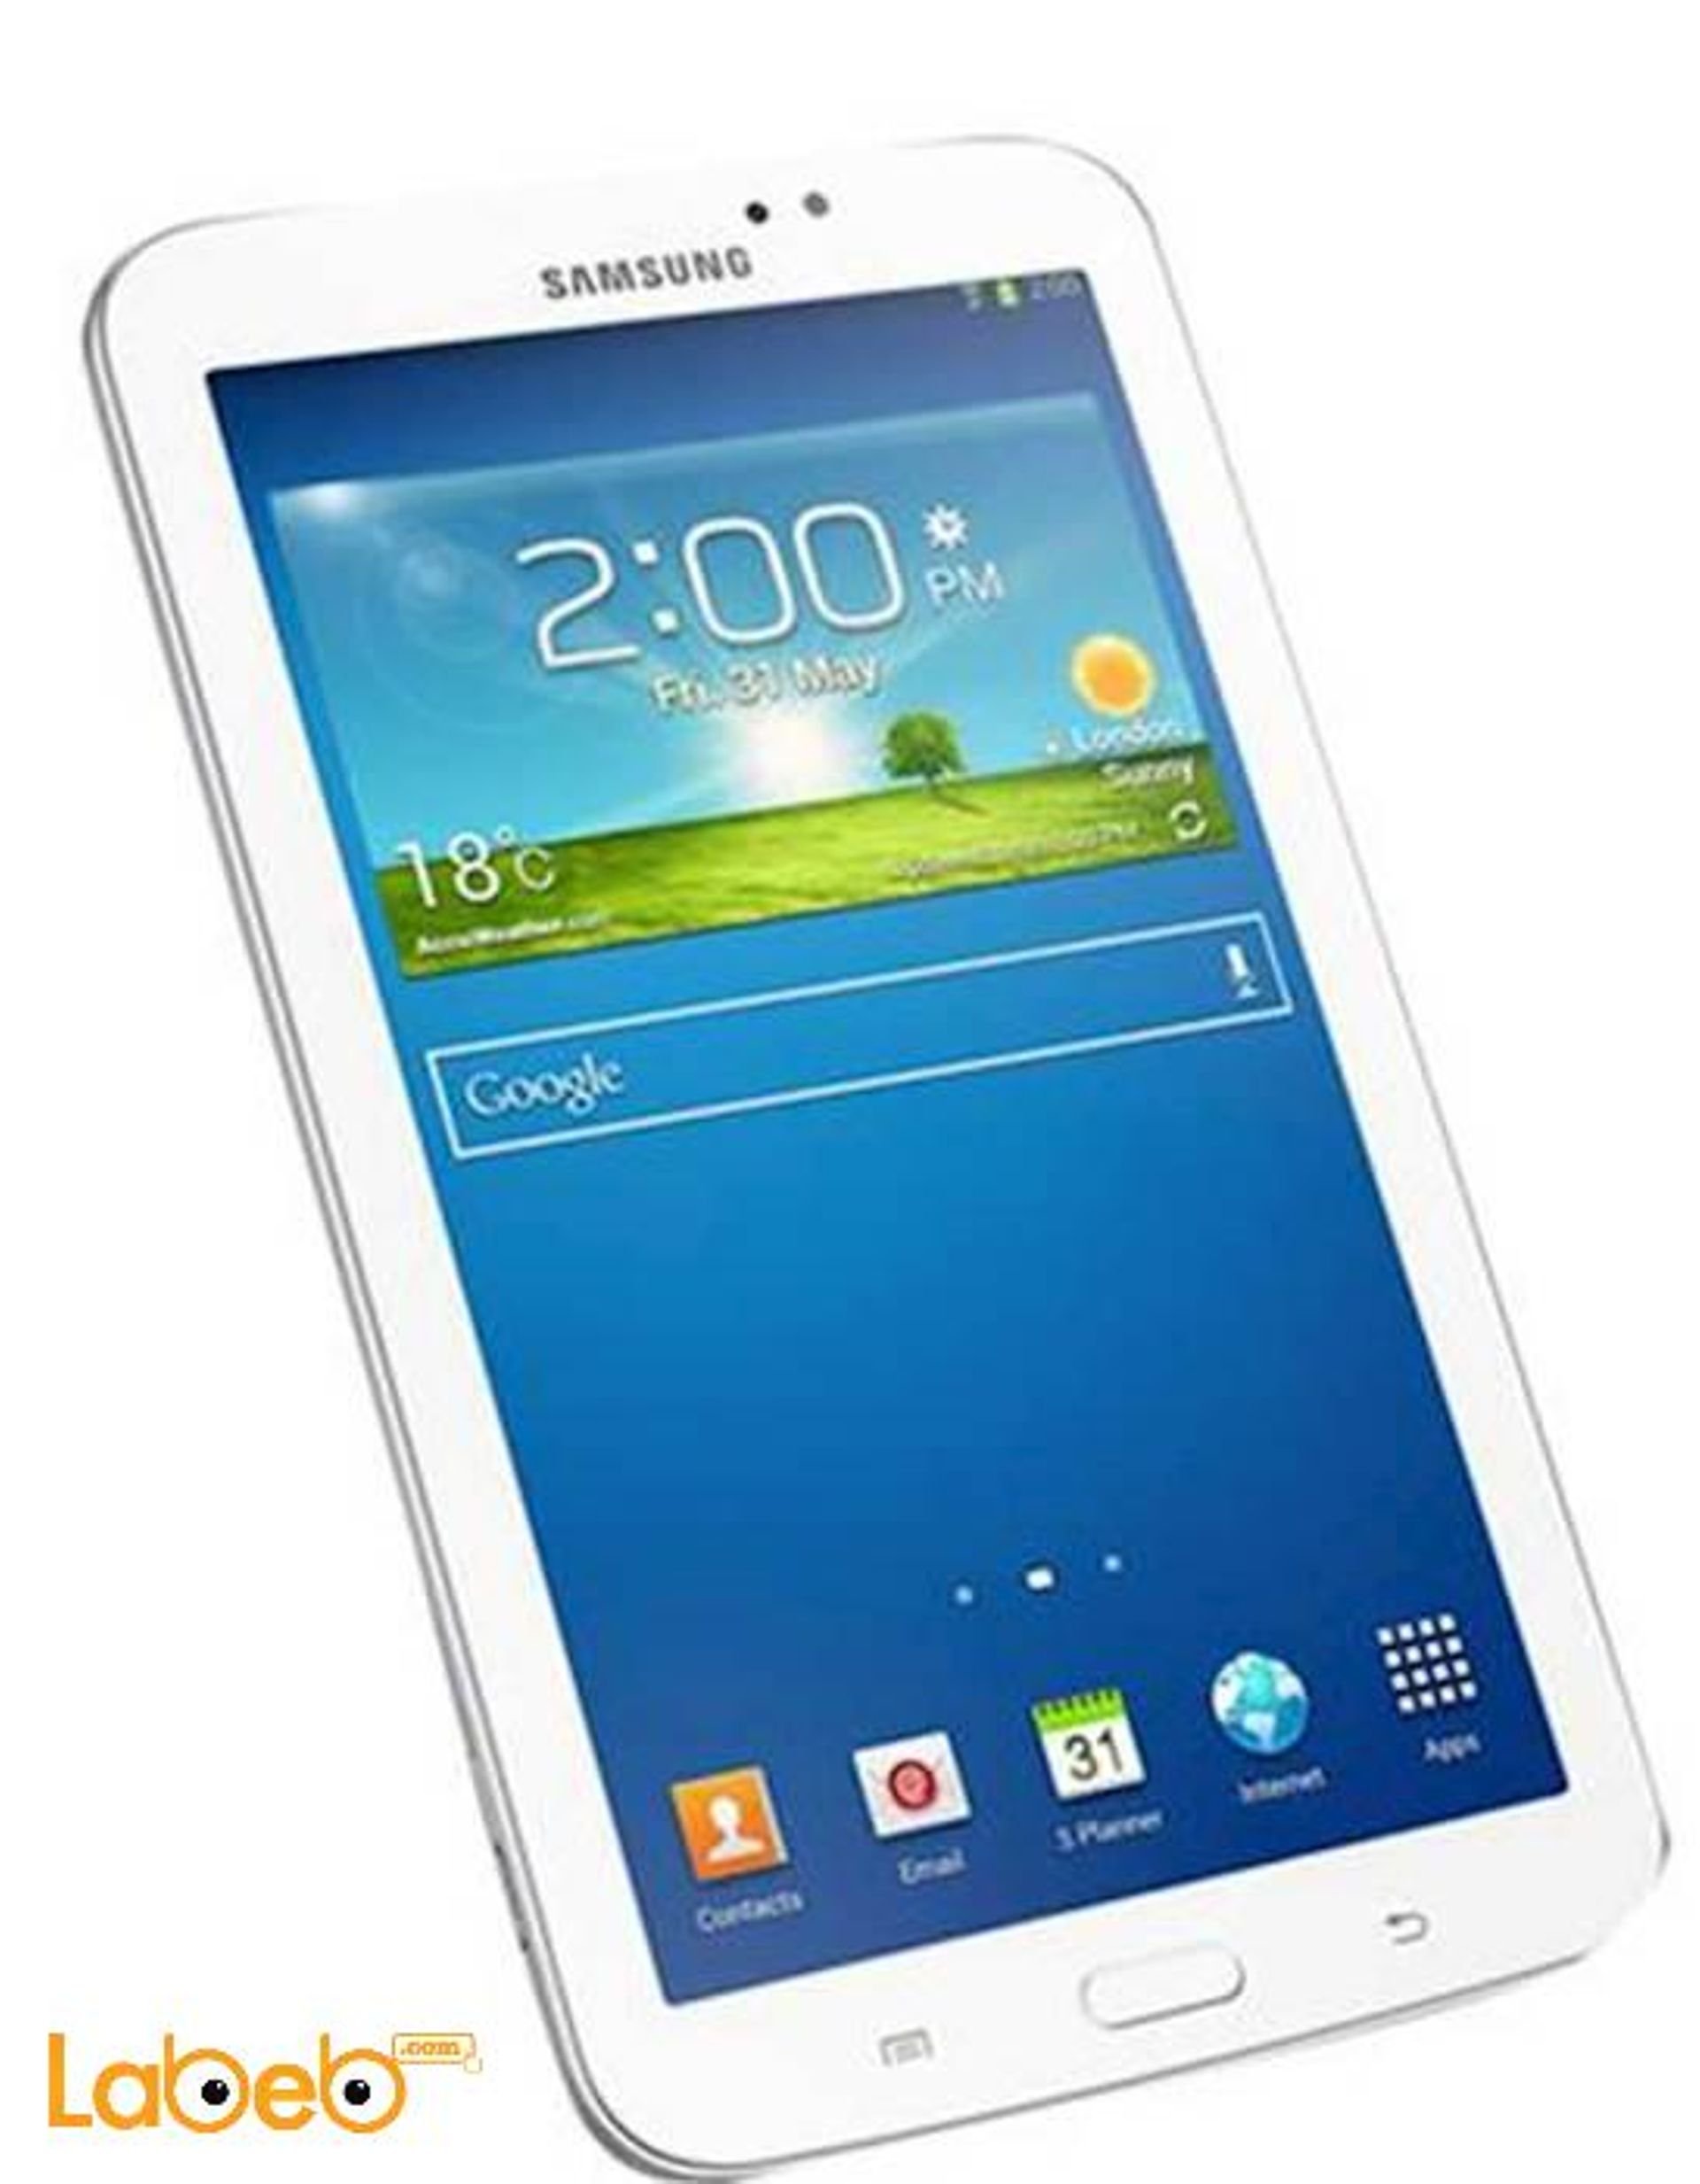 Samsung Galaxy Tab 3 7.0 Характеристики